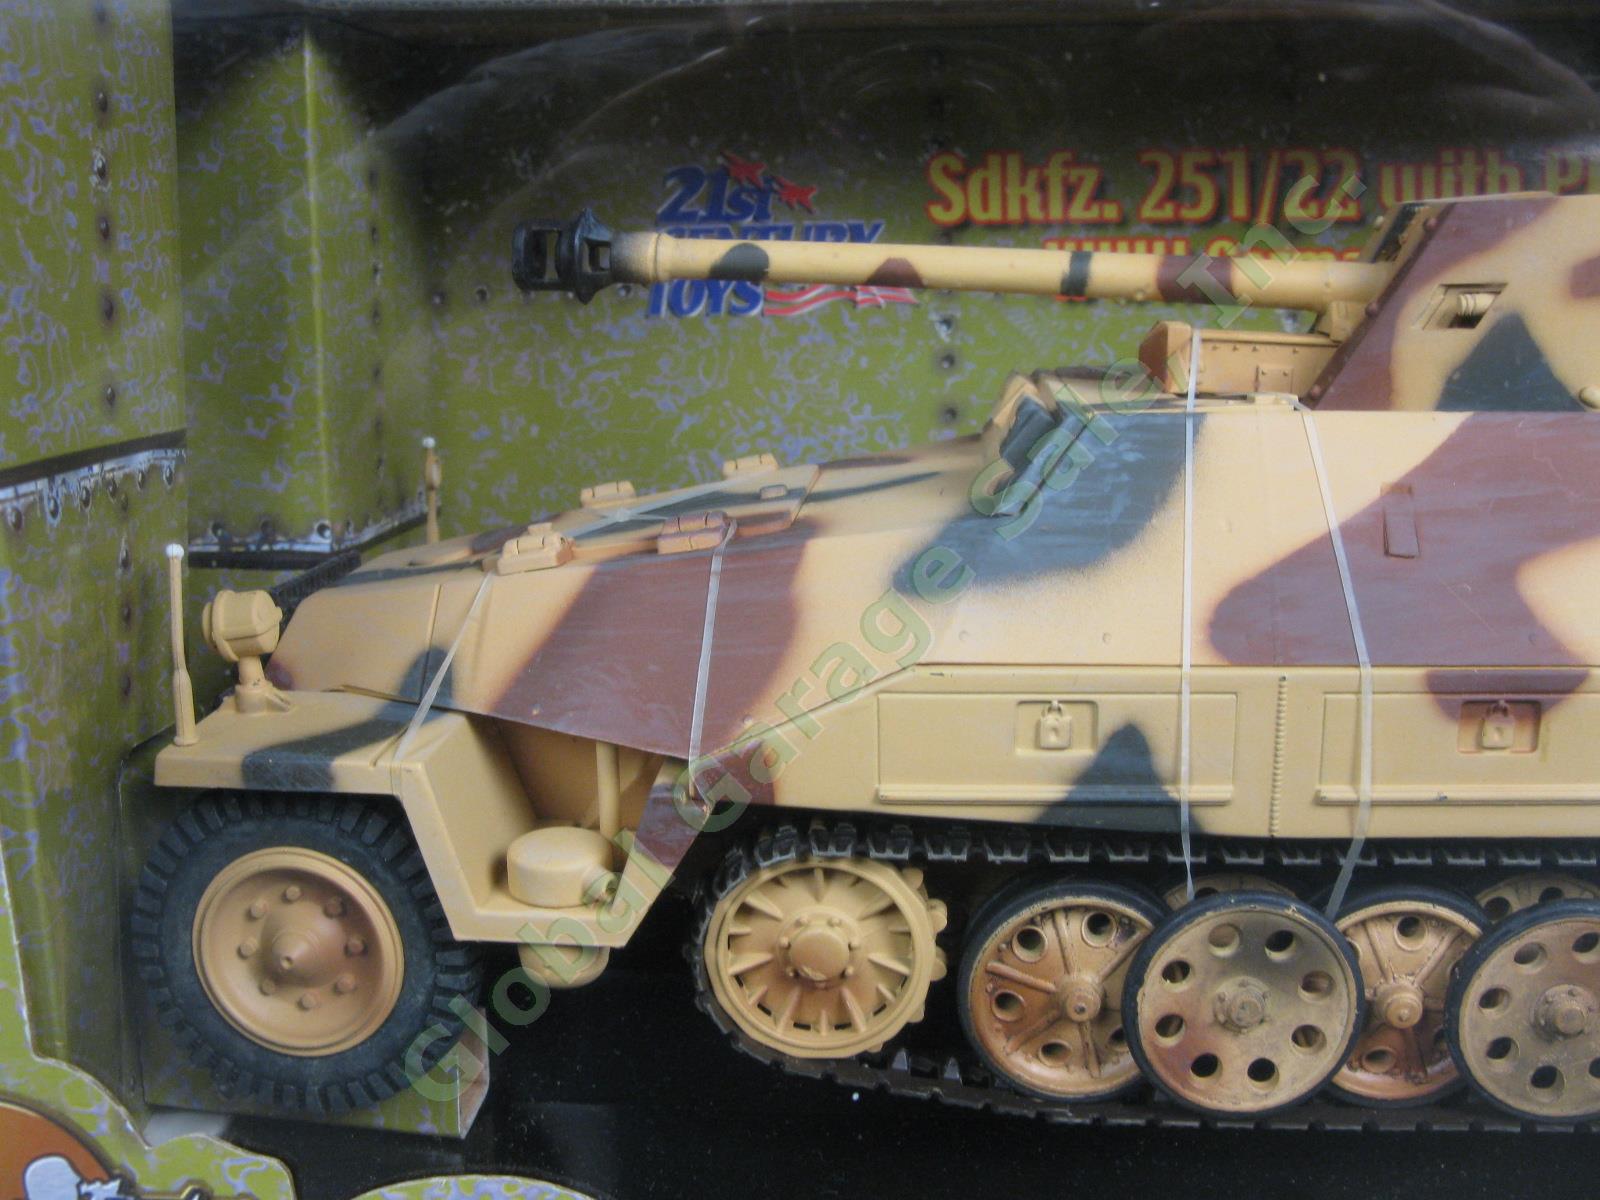 Ultimate Soldier 1/18 Sdkfz 251/22 PAK 40 WWII German Halftrack Tank 21st Toys 1